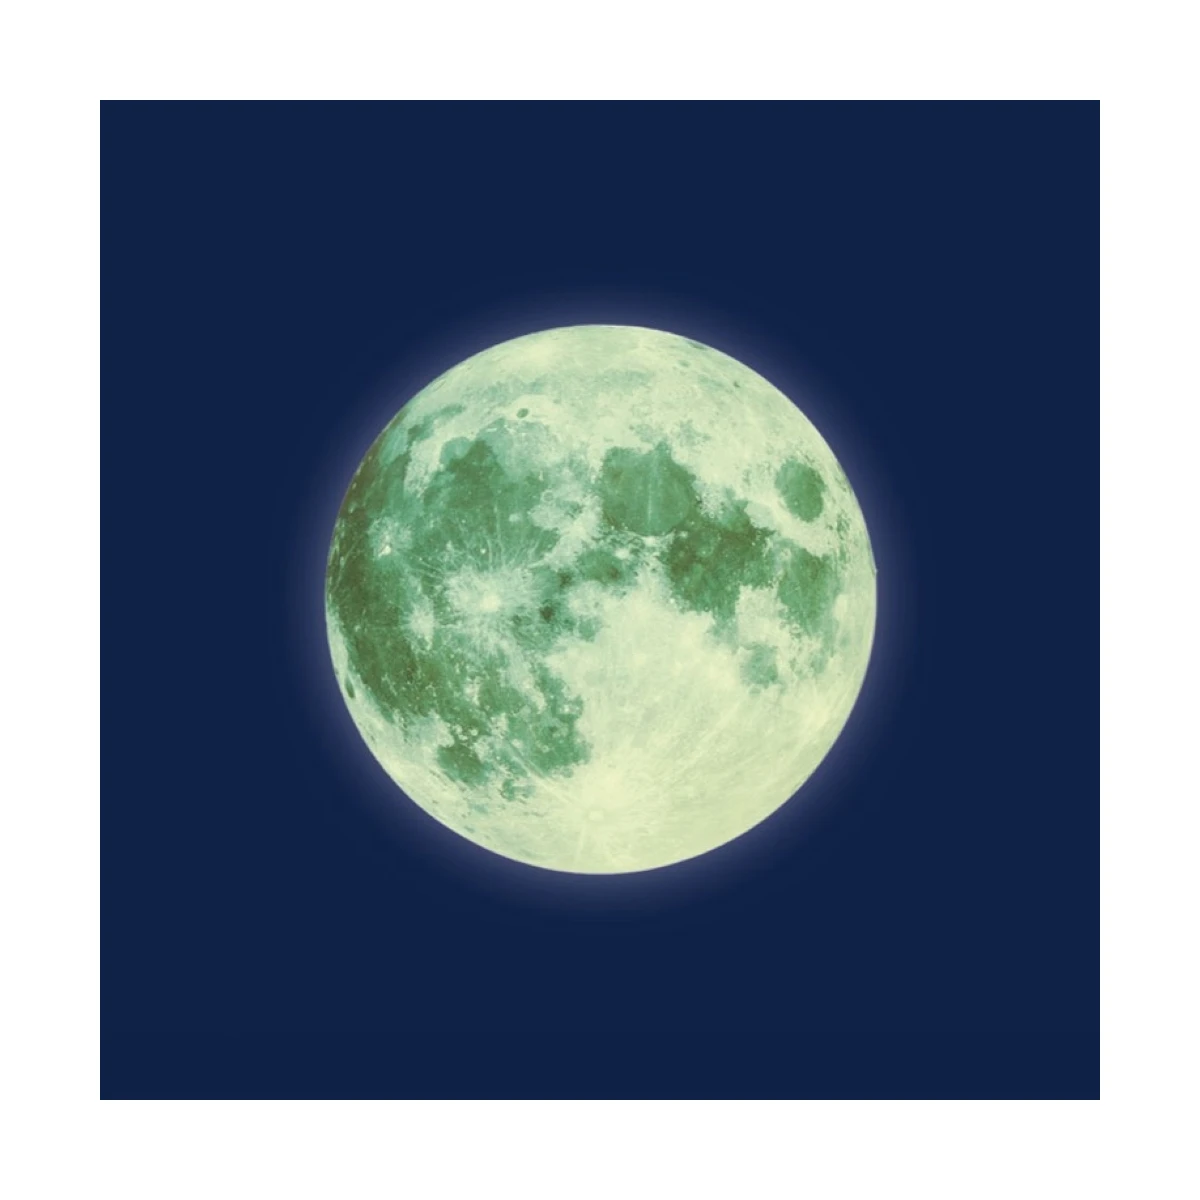 The moon glows in the dark - AstroMedia